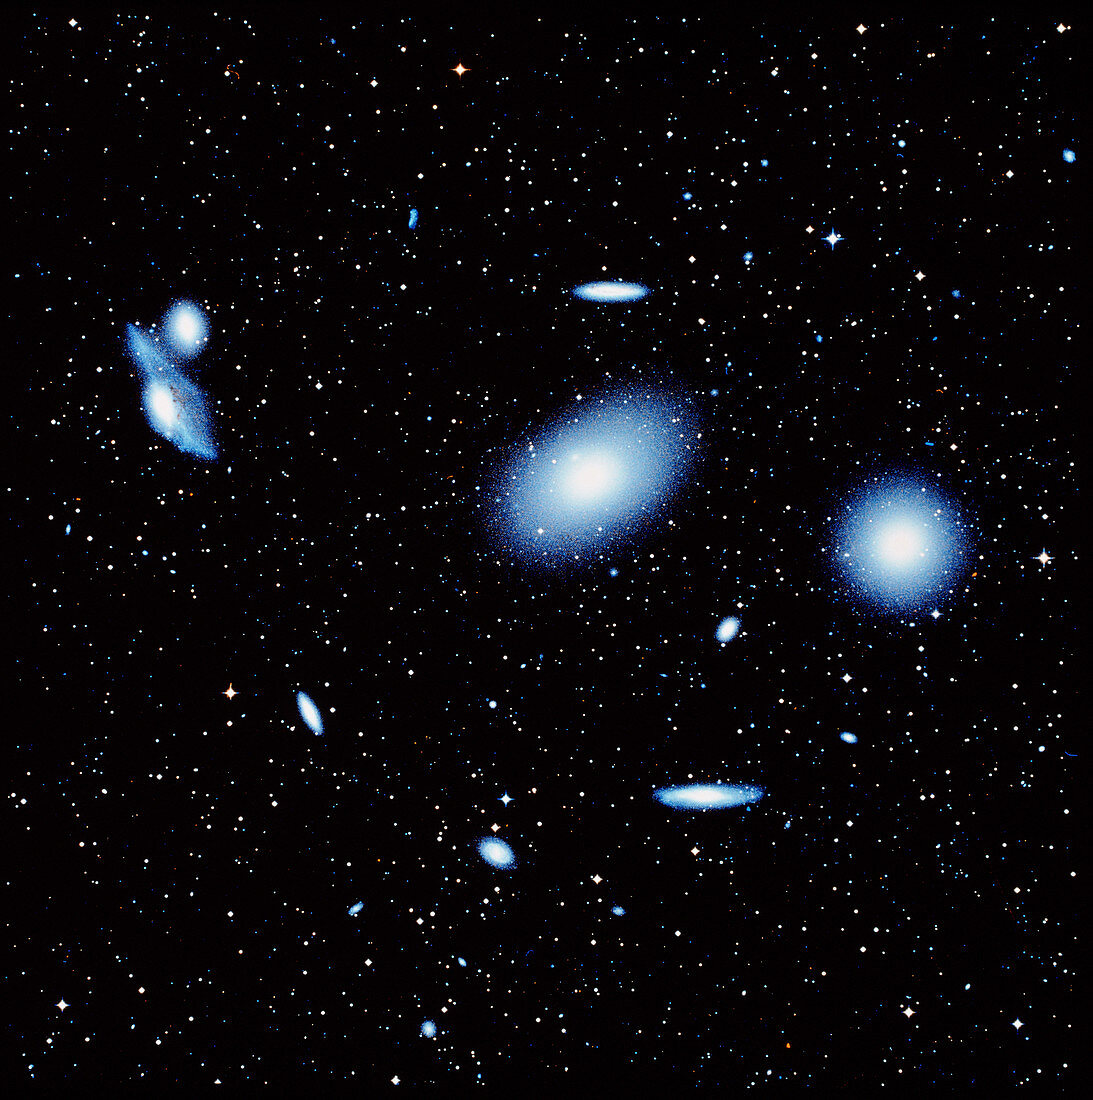 The Virgo cluster of galaxies